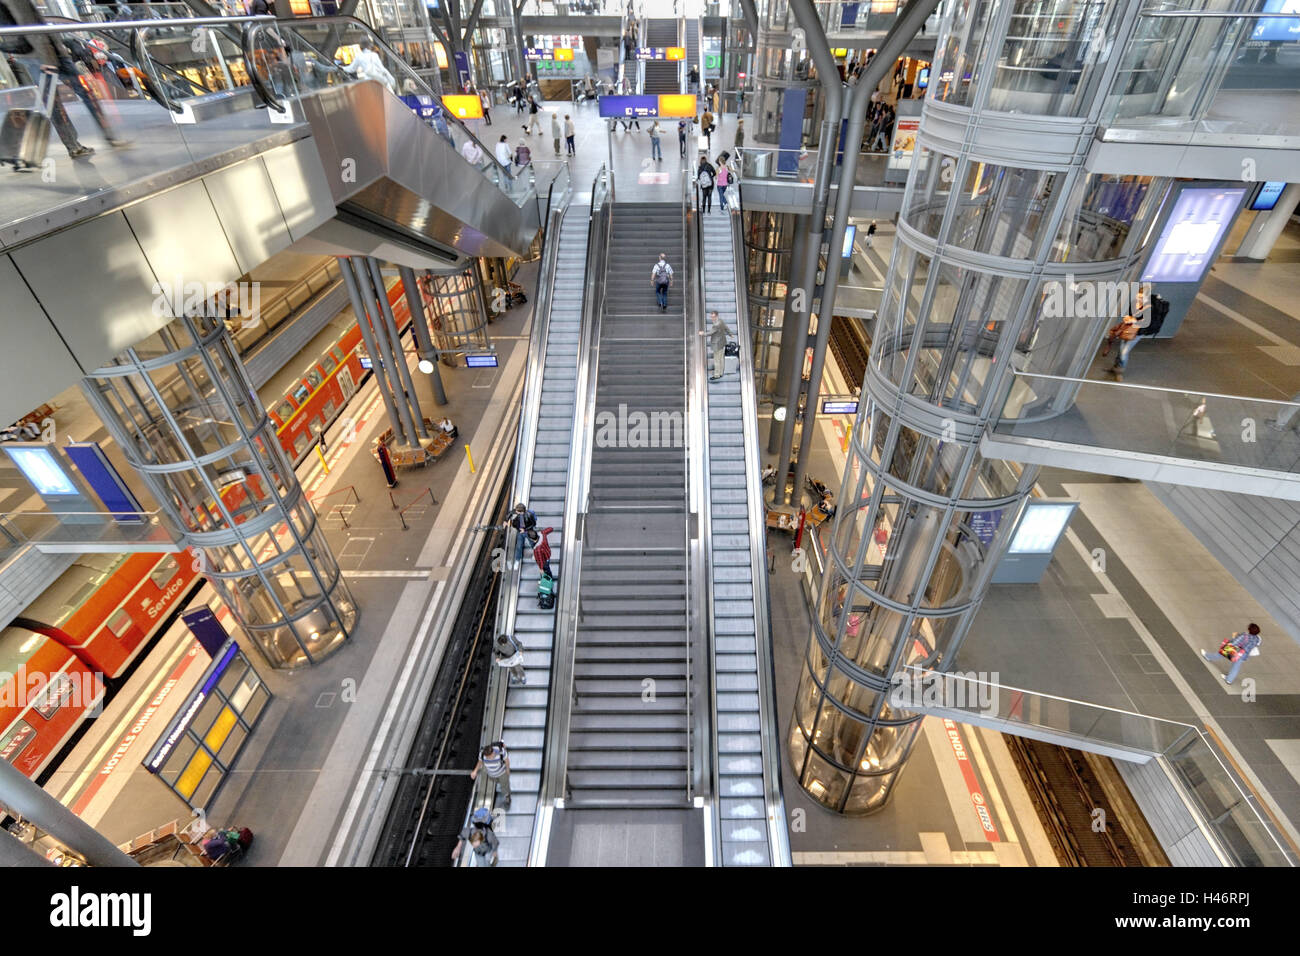 Germany, Berlin, Berlin central station, escalators, tourists, Stock Photo